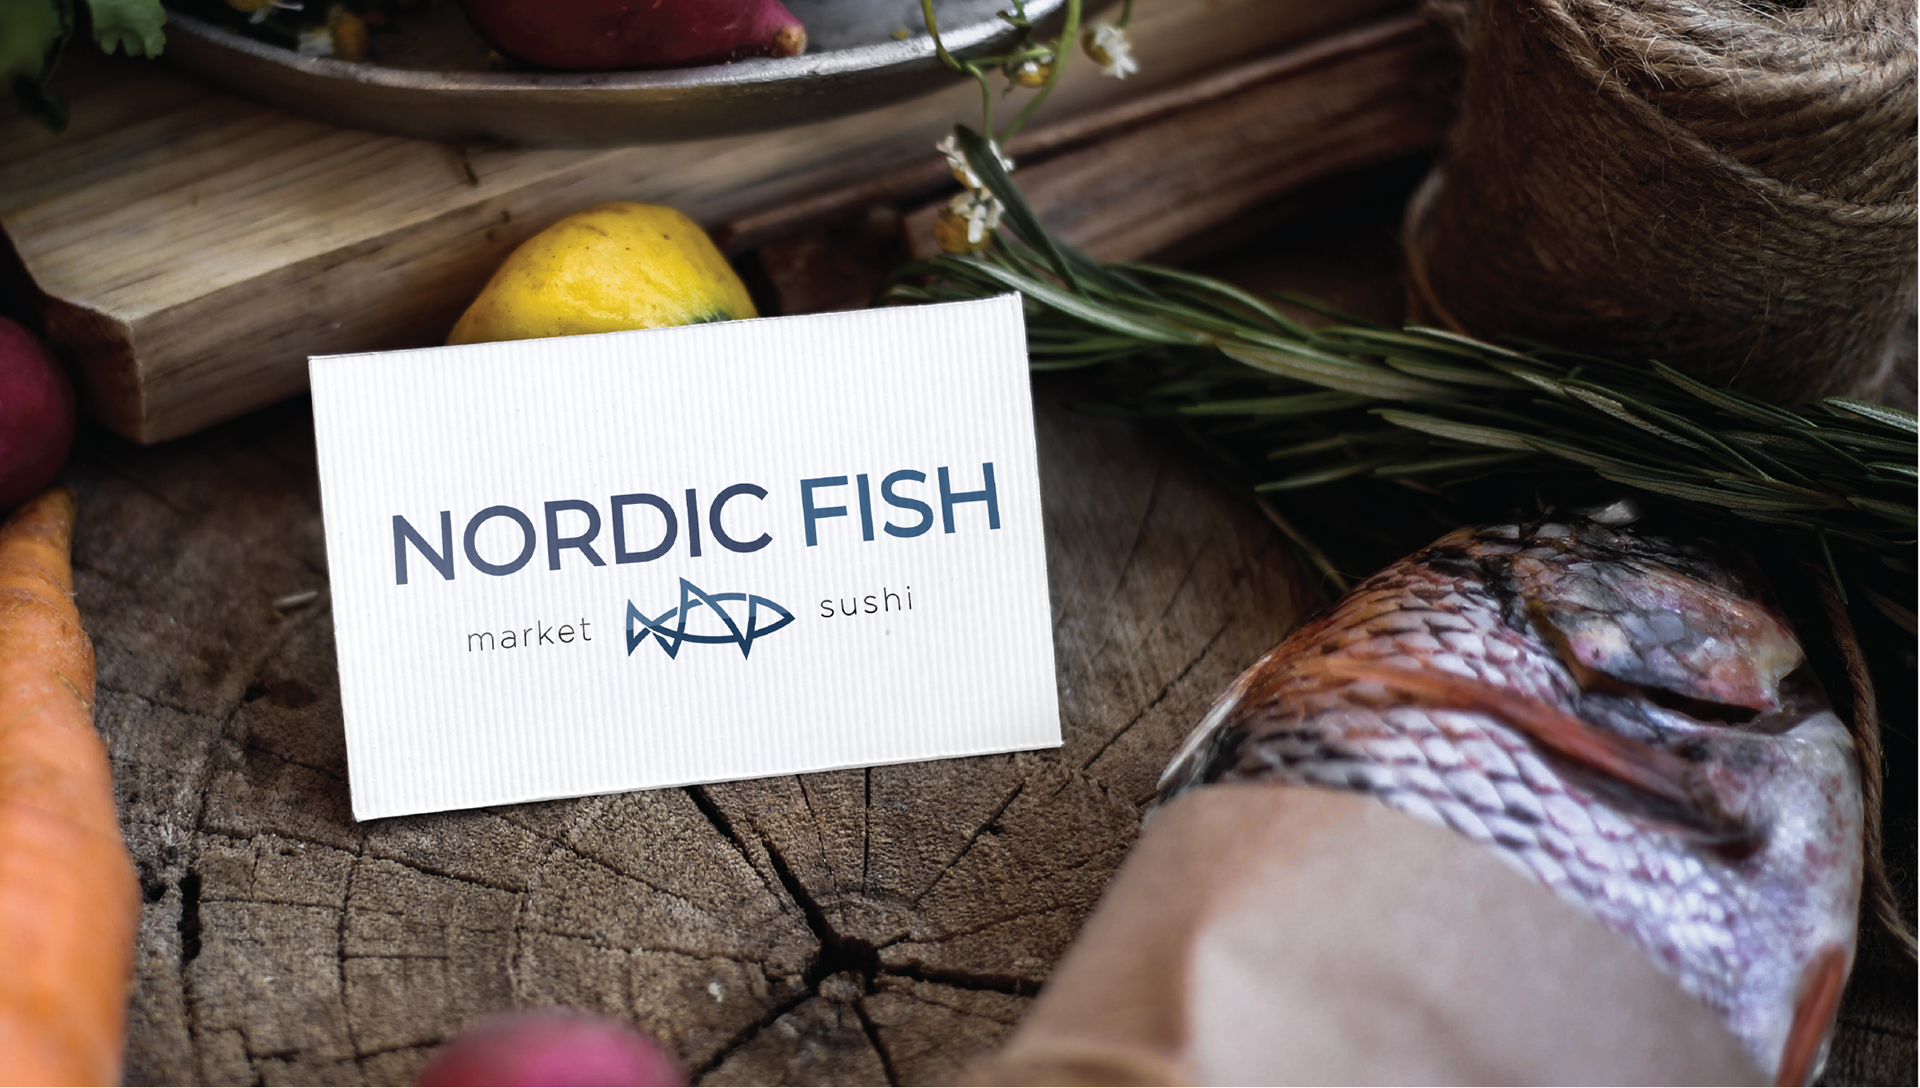 Nord fish. Бренд Nord Fish. ООО Нордик Фиш. Nordic бренд рыба. Nord Fish частная марка.